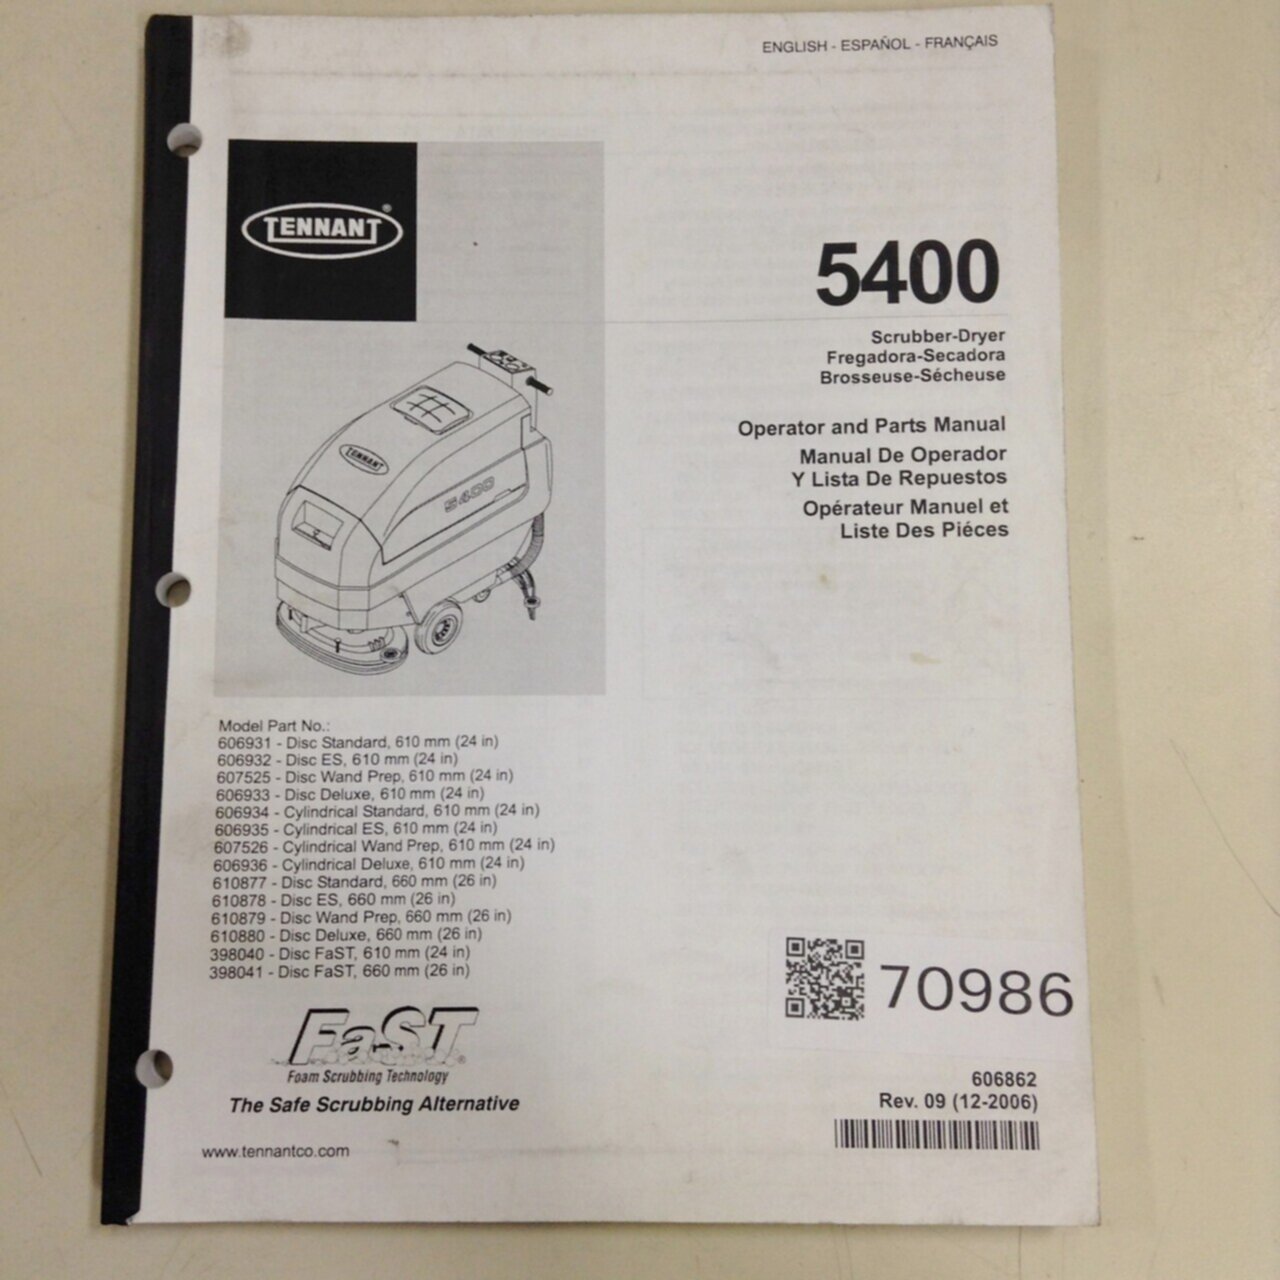 TENNANT Operator & Parts Manual 606862 Used #70986 | eBay